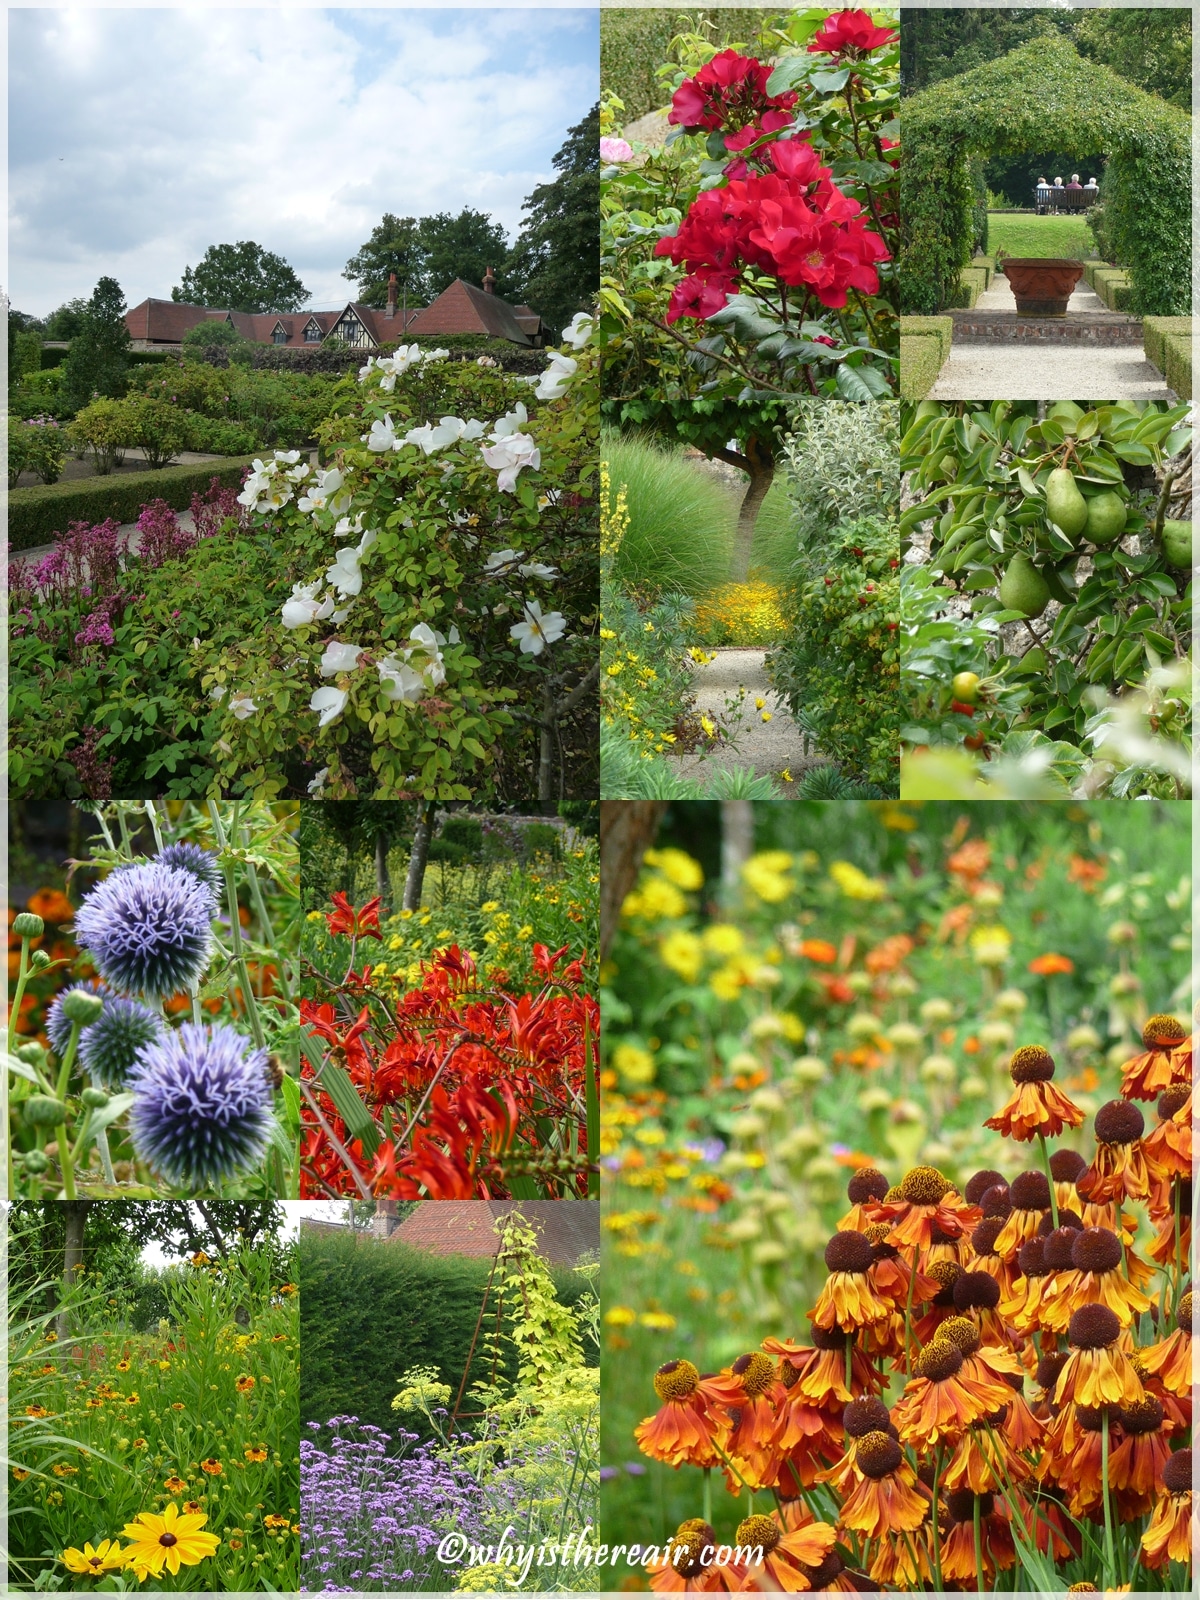 Scenes from Loseley's Gardens